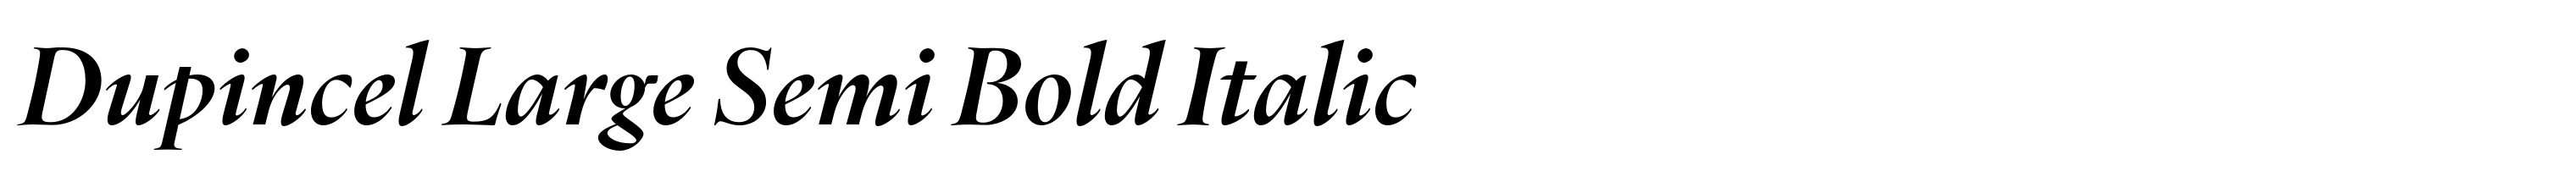 Dupincel Large Semi Bold Italic